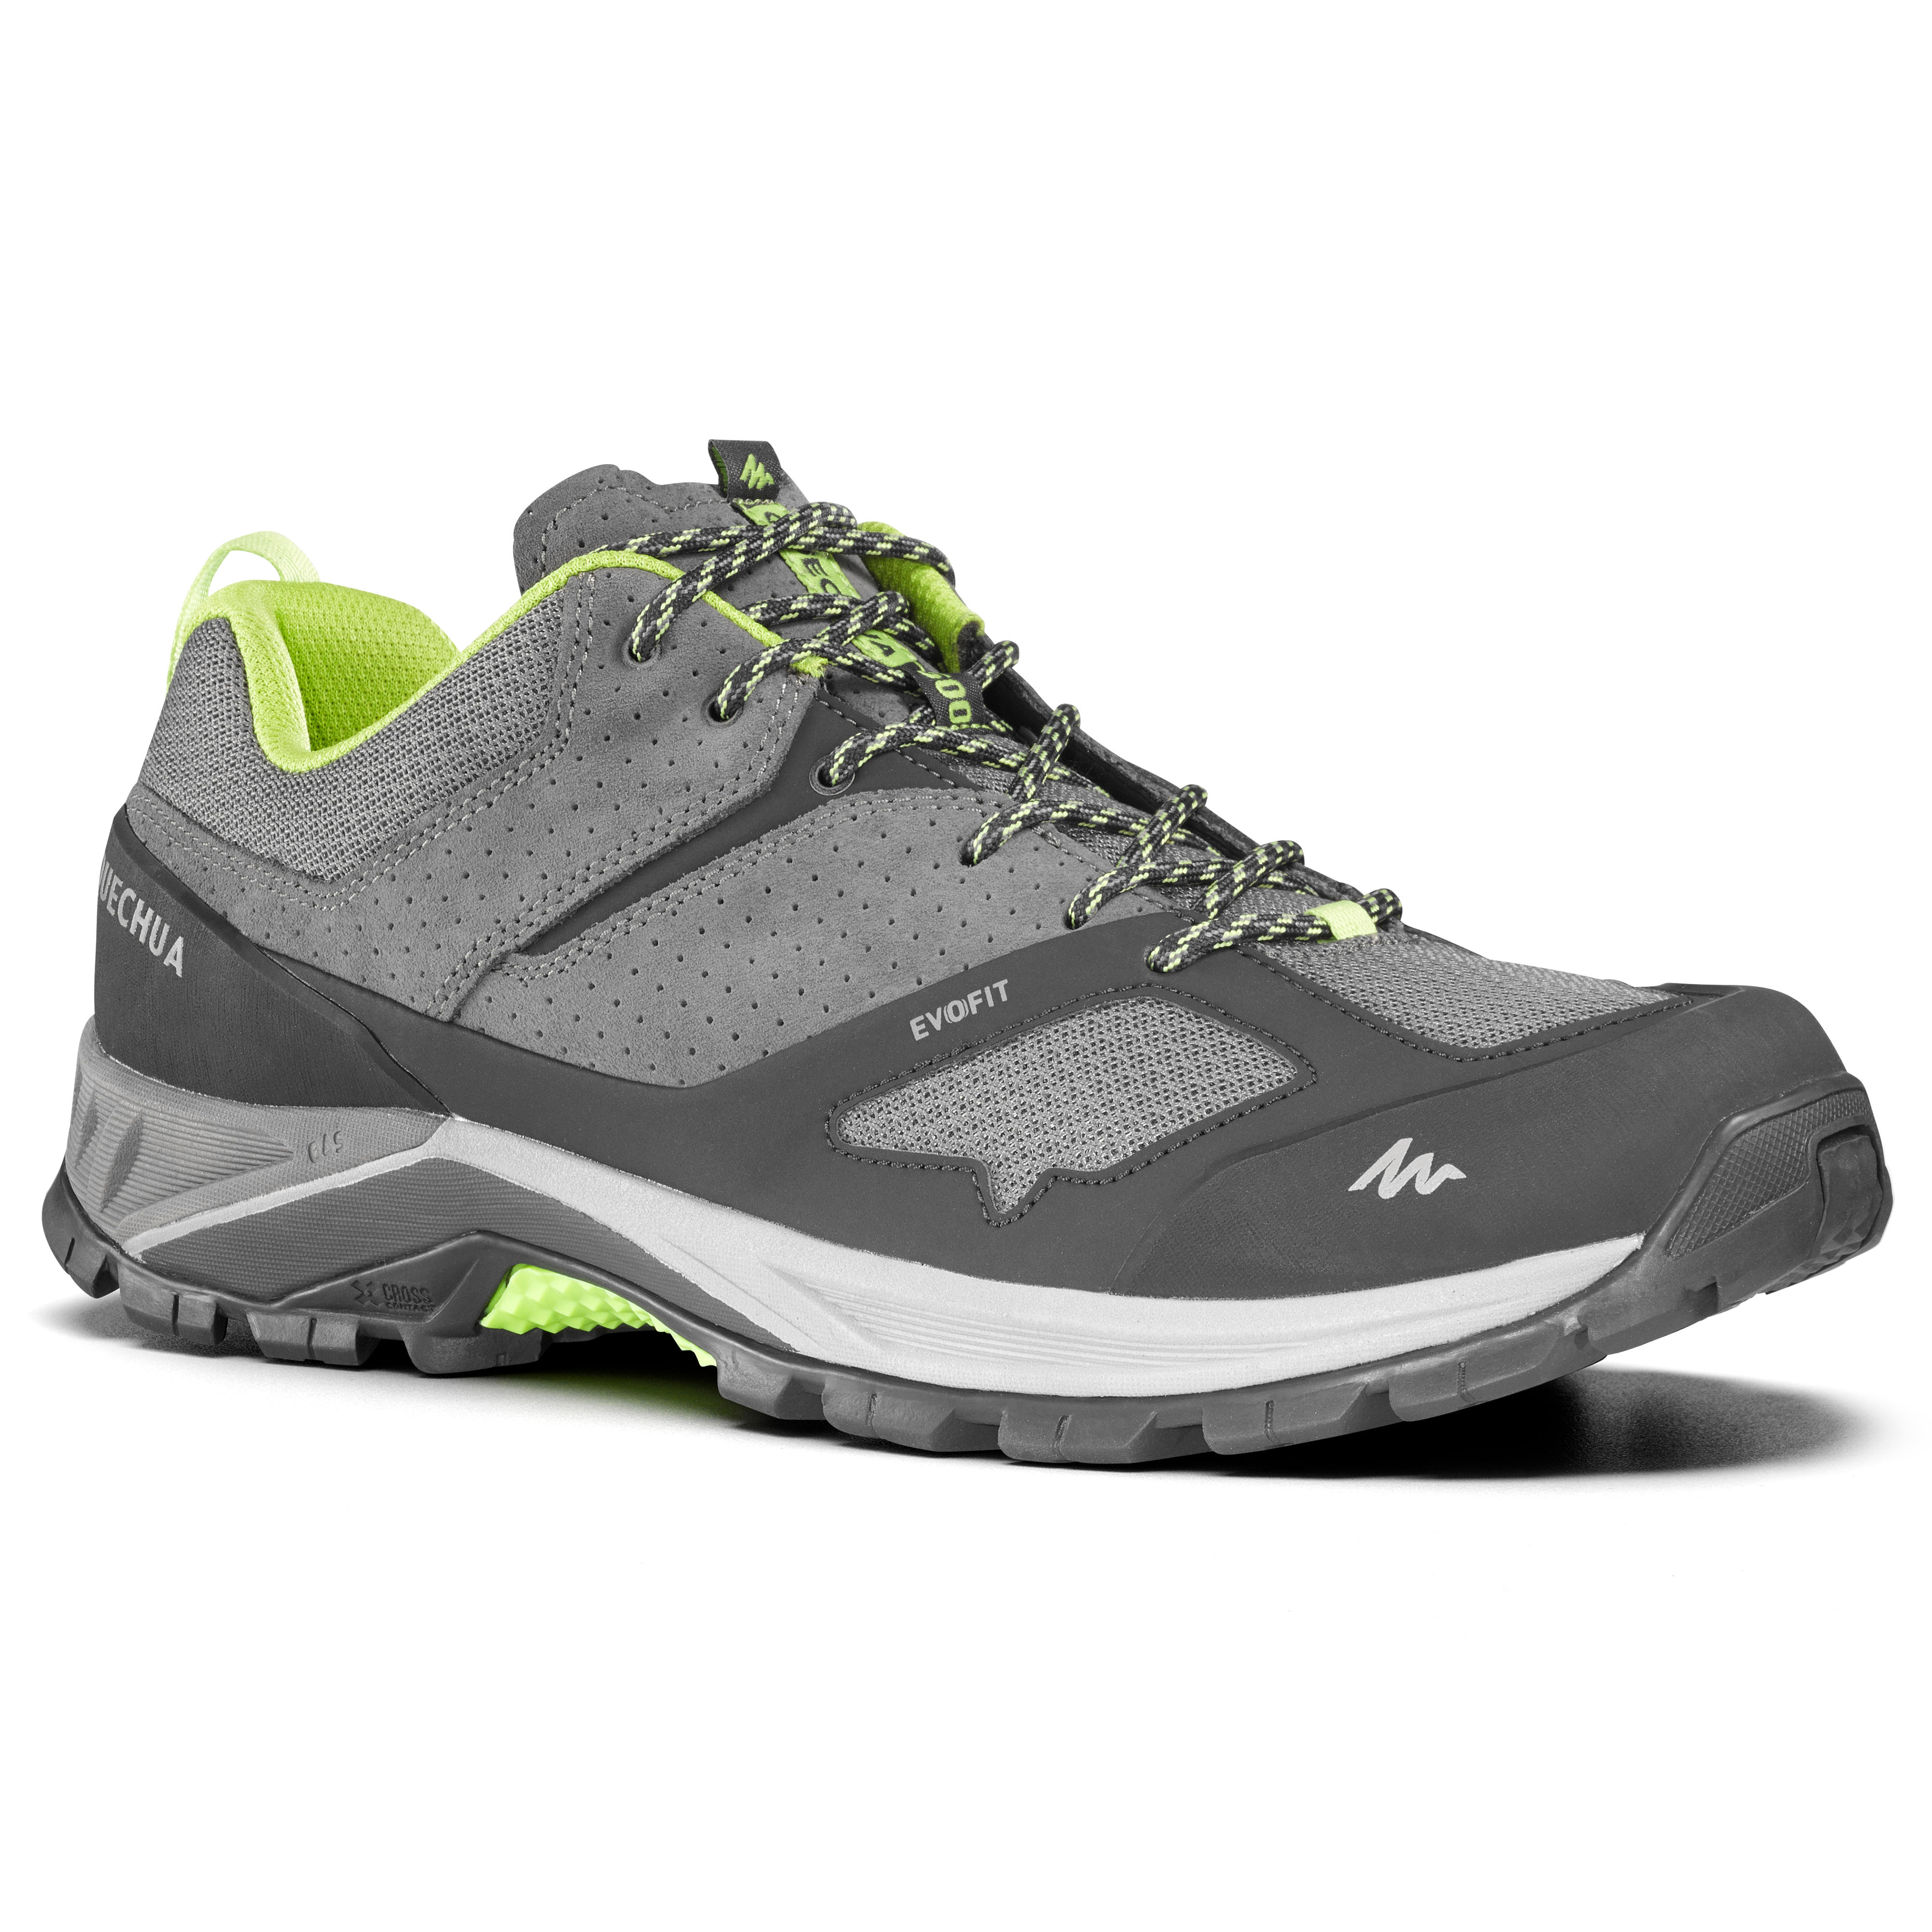 Men's mountain hiking shoes - MH500 